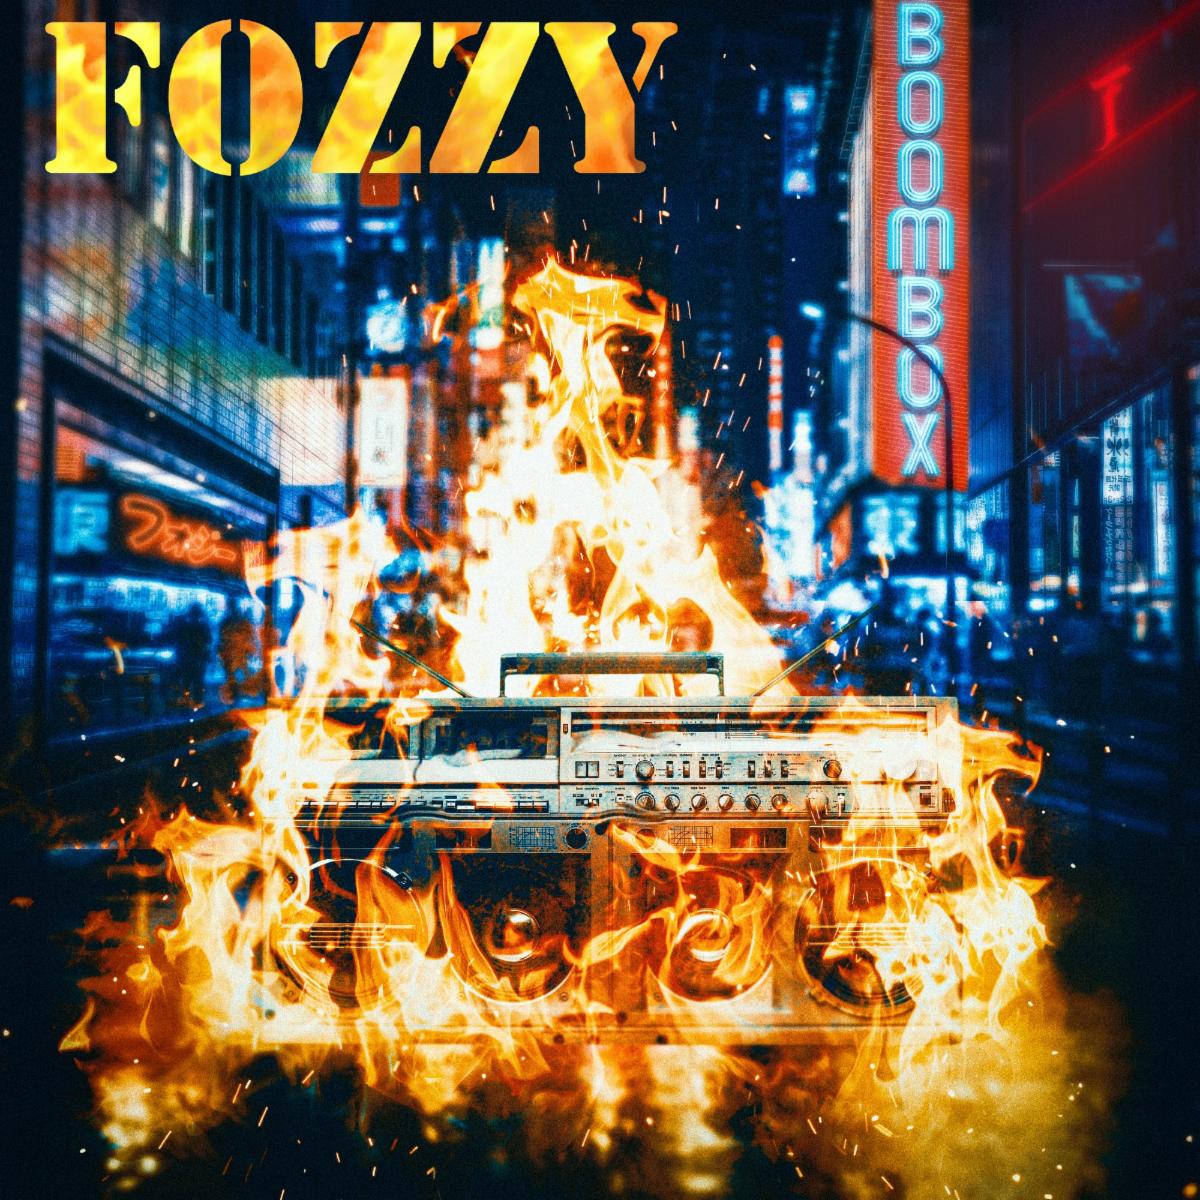 FOZZY Release Anthemic New Single "I STILL BURN" - Landmark Hit "Judas" Reaches Gold Certified